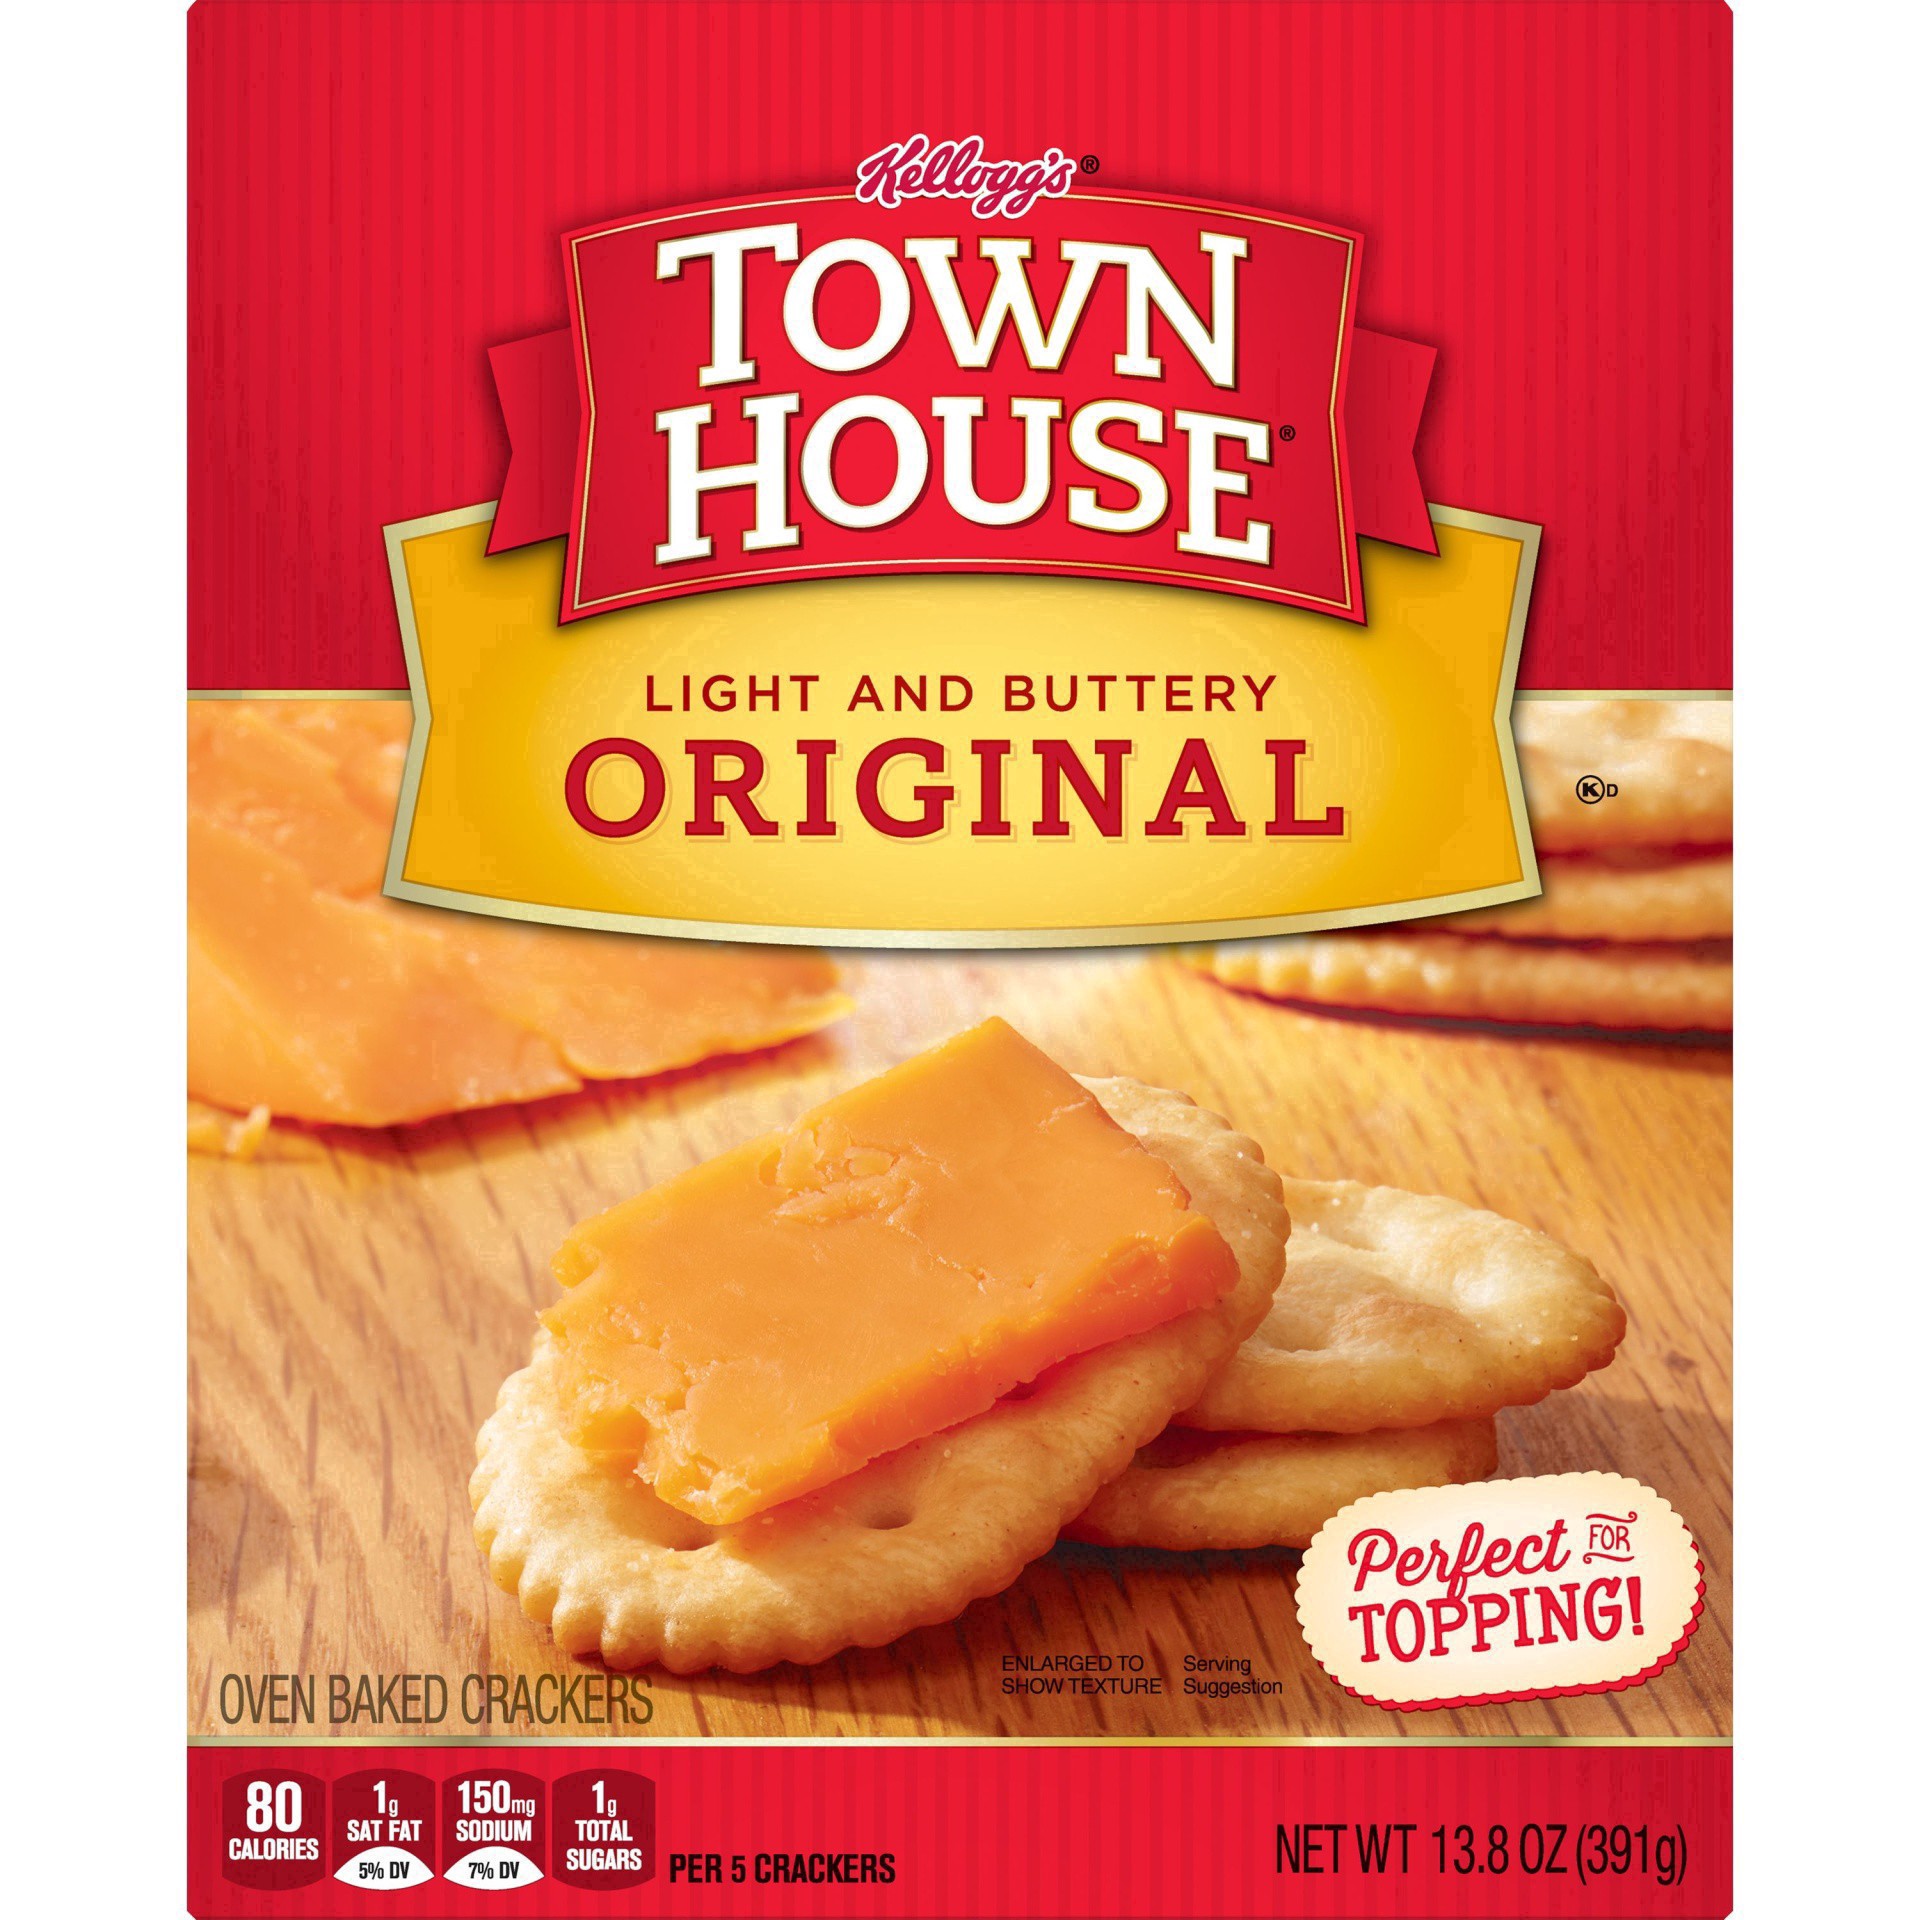 slide 59 of 101, Town House Kellogg's Town House Original Snack Crackers - 13.8oz, 13.8 oz